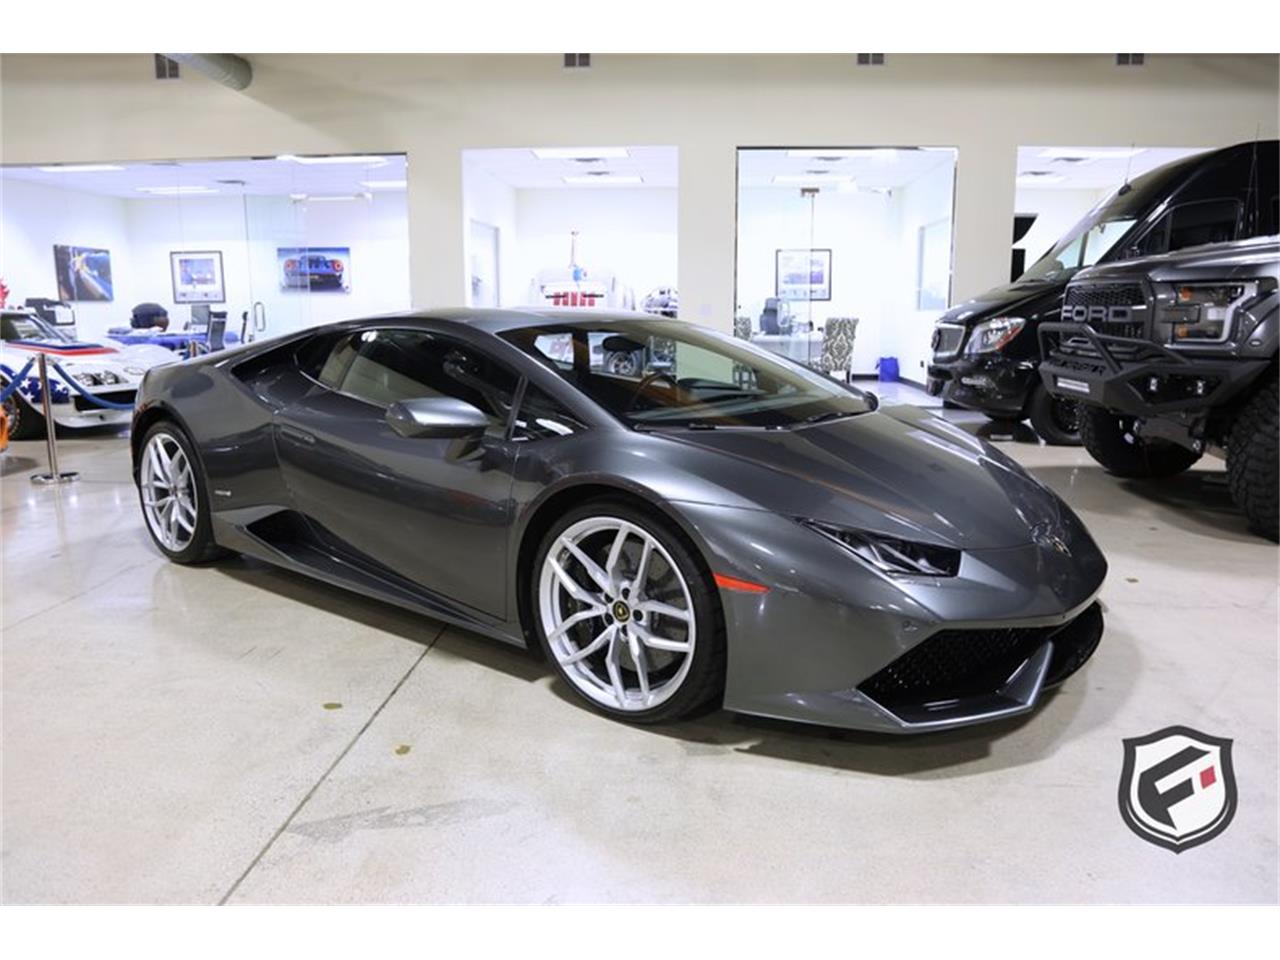 2015 Lamborghini Huracan for Sale | ClassicCars.com | CC ...